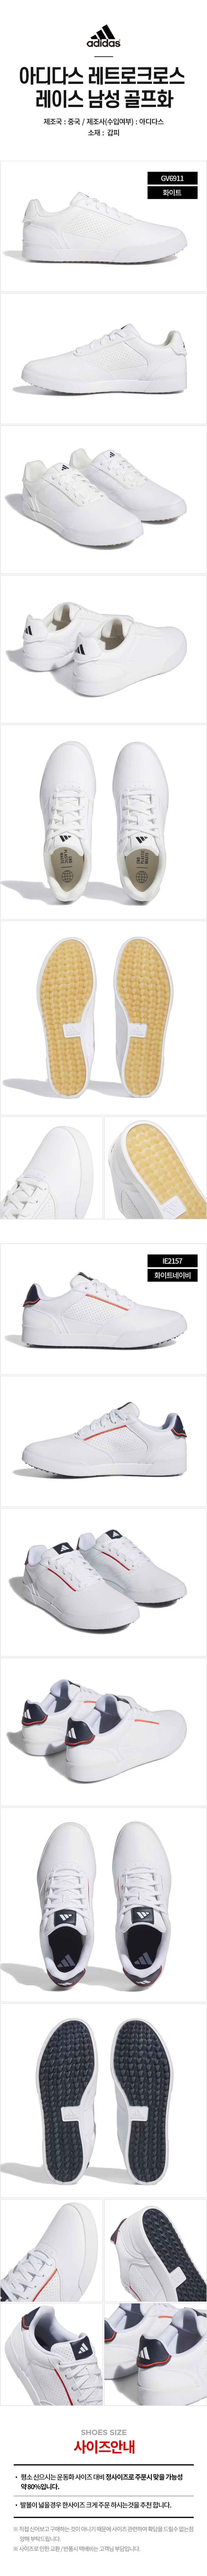 adidas_retro_cross_race_m_golf_shoes_23.jpg